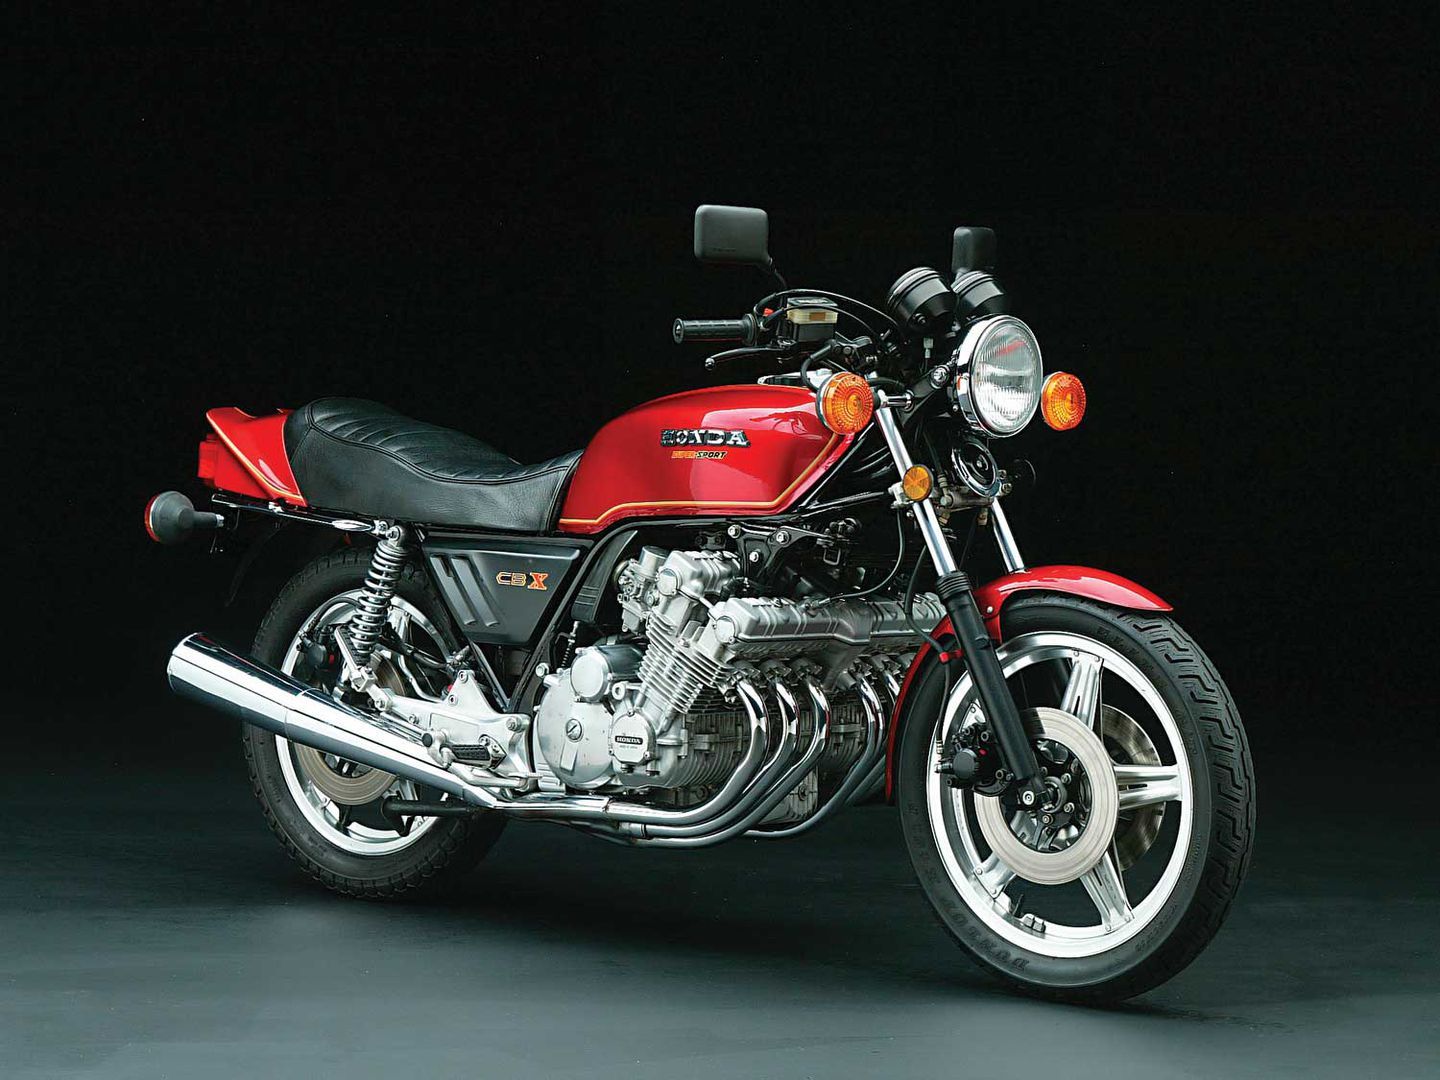 The Honda CBX1000 was the iconic six-cylinder bike